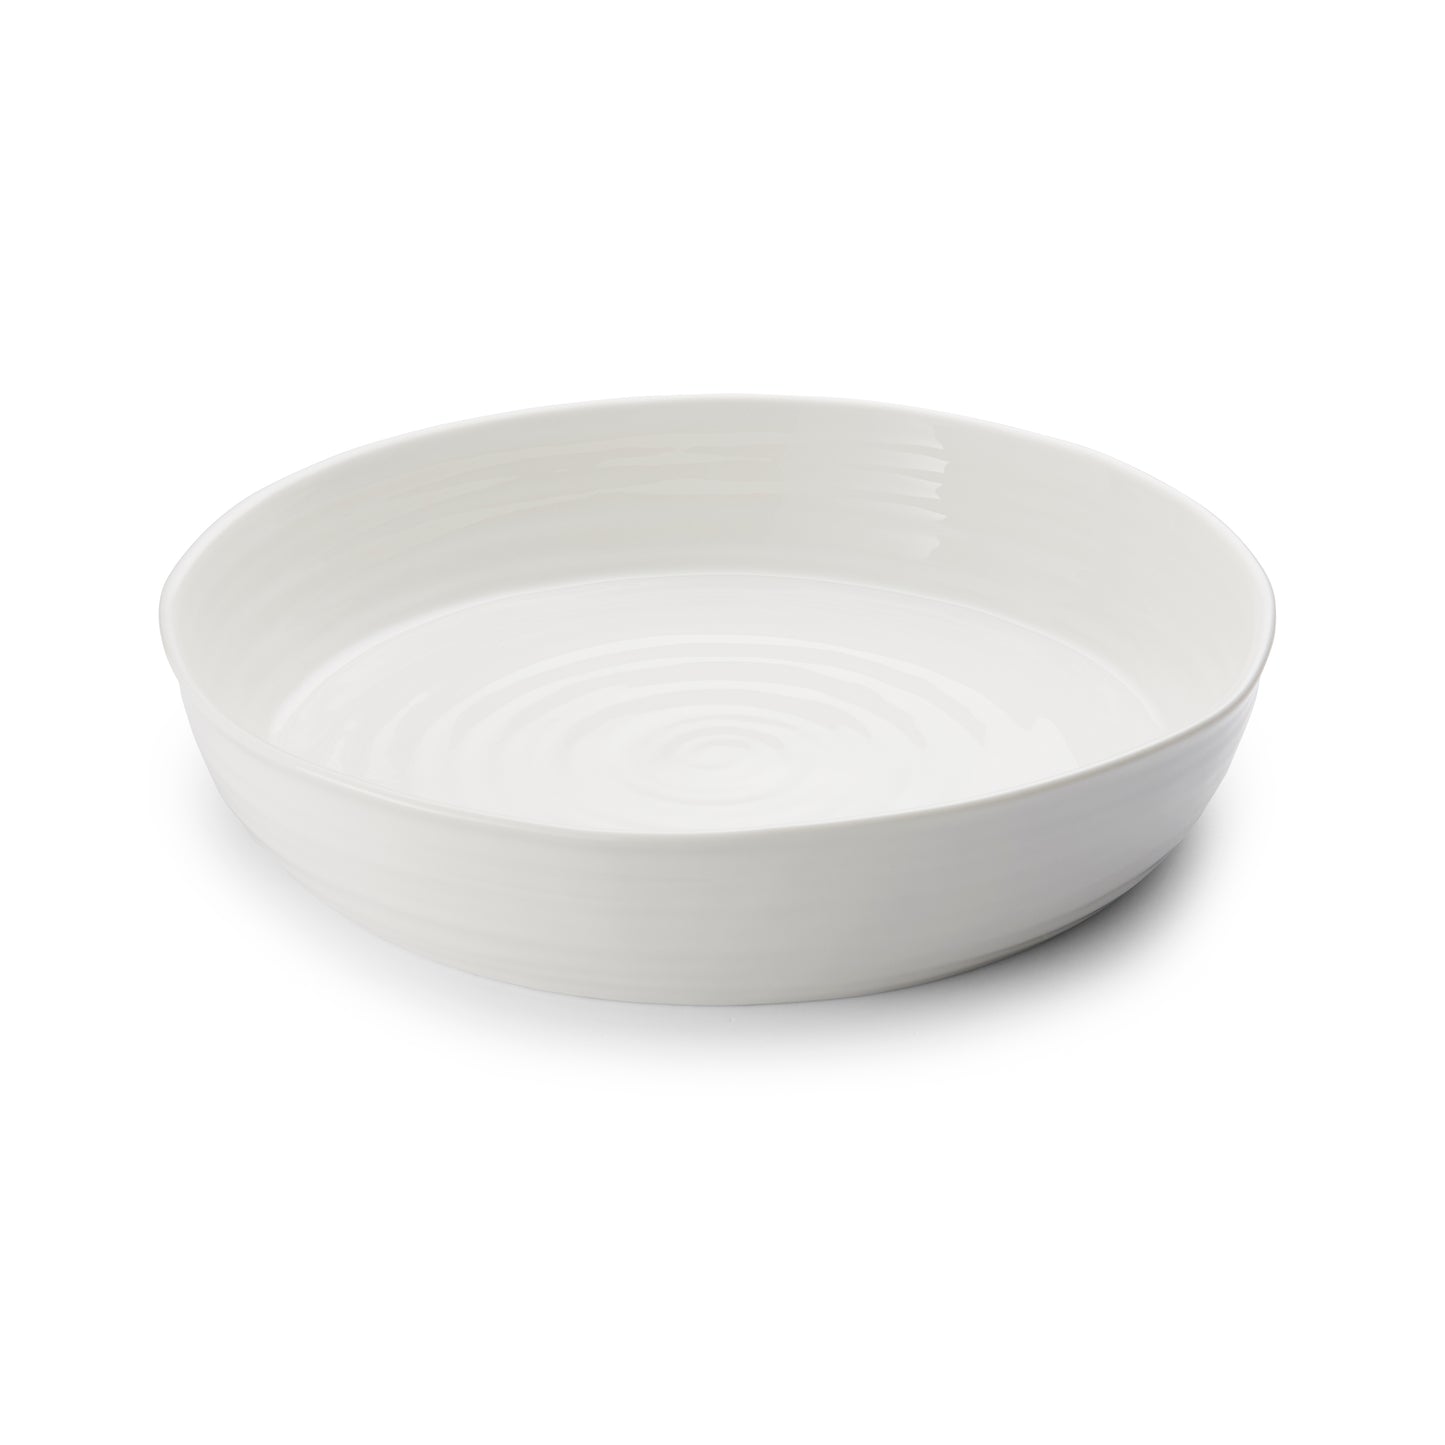 Sophie Conran for Portmeirion White Round Roasting Dish 28cm